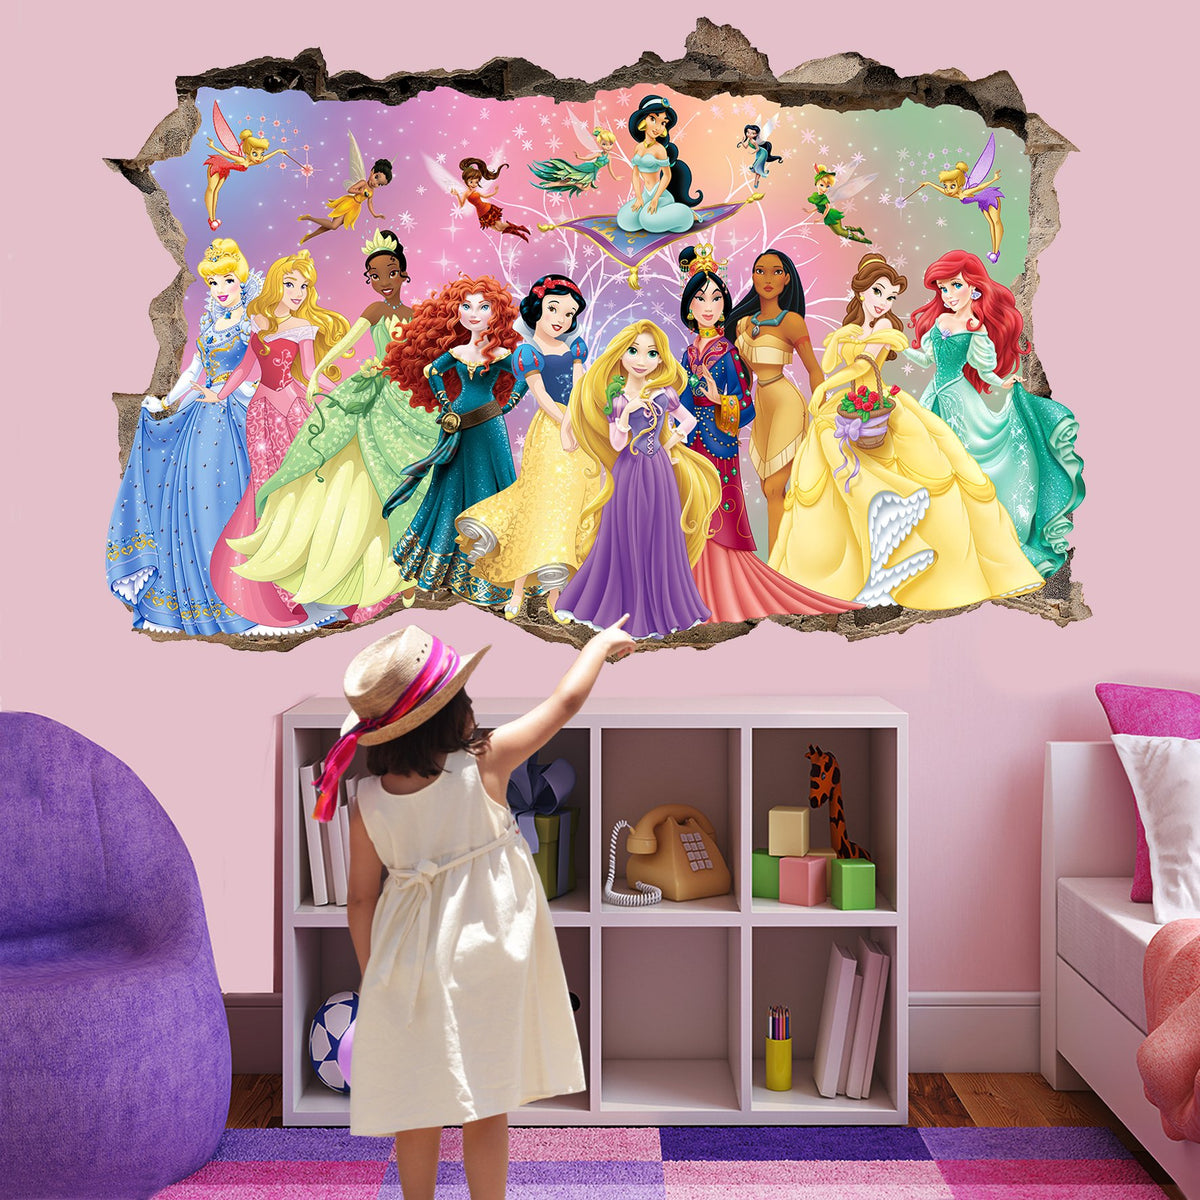 Dreamers Have More Fun Princess Children Cinderella Girl Wall Sticker Decals UK